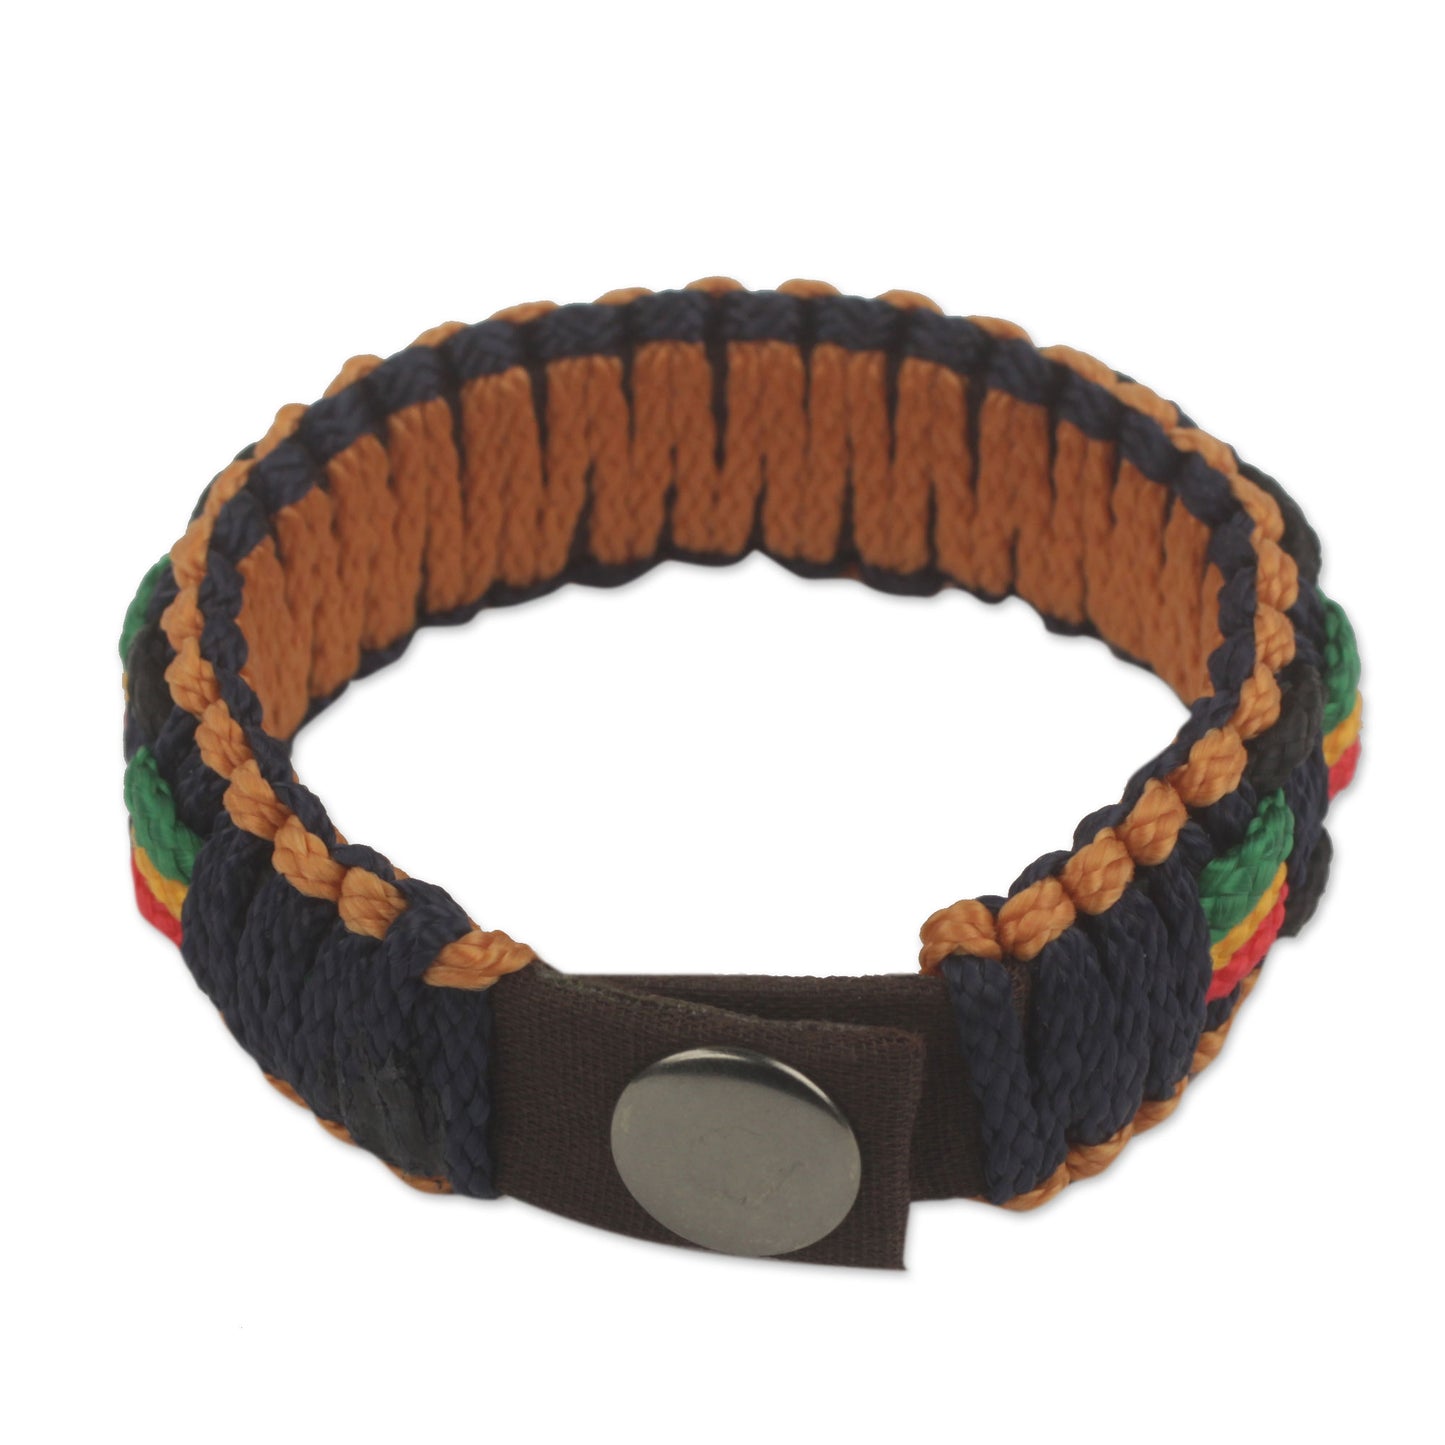 Good Vibes Men's Colorful Woven Wristband Bracelet